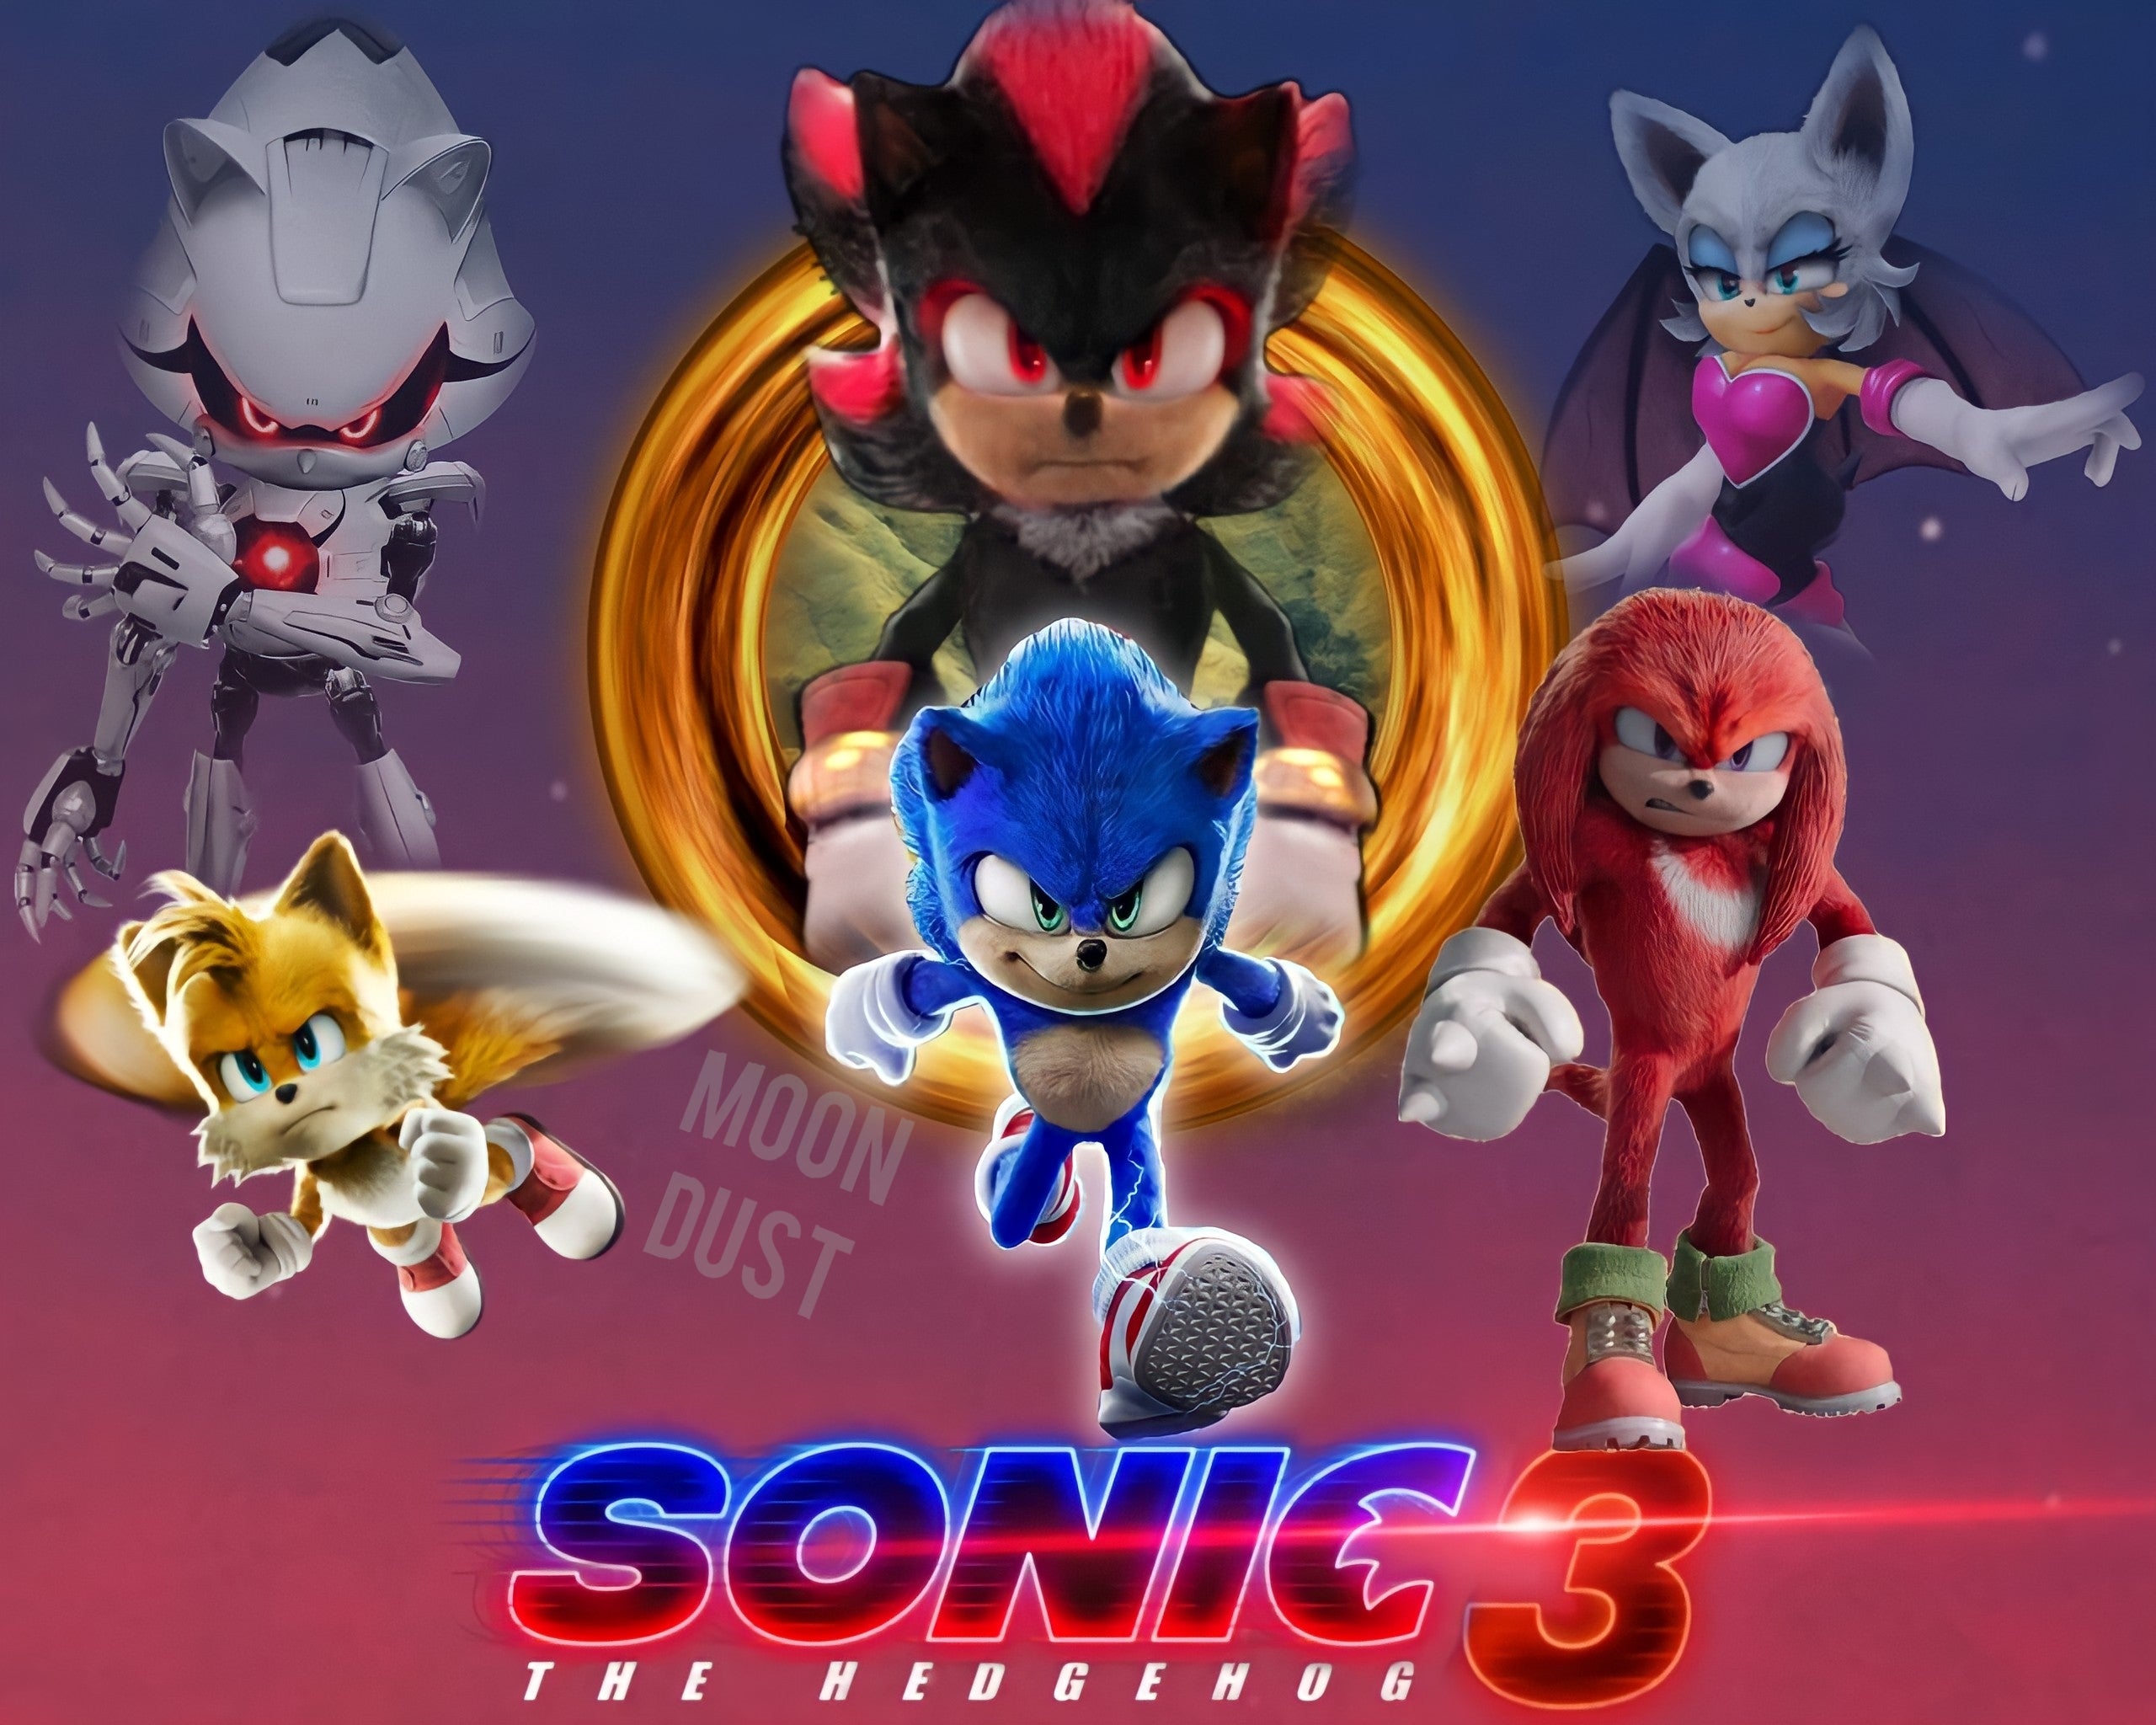 Sonic the Hedgehog 30th Anniversary